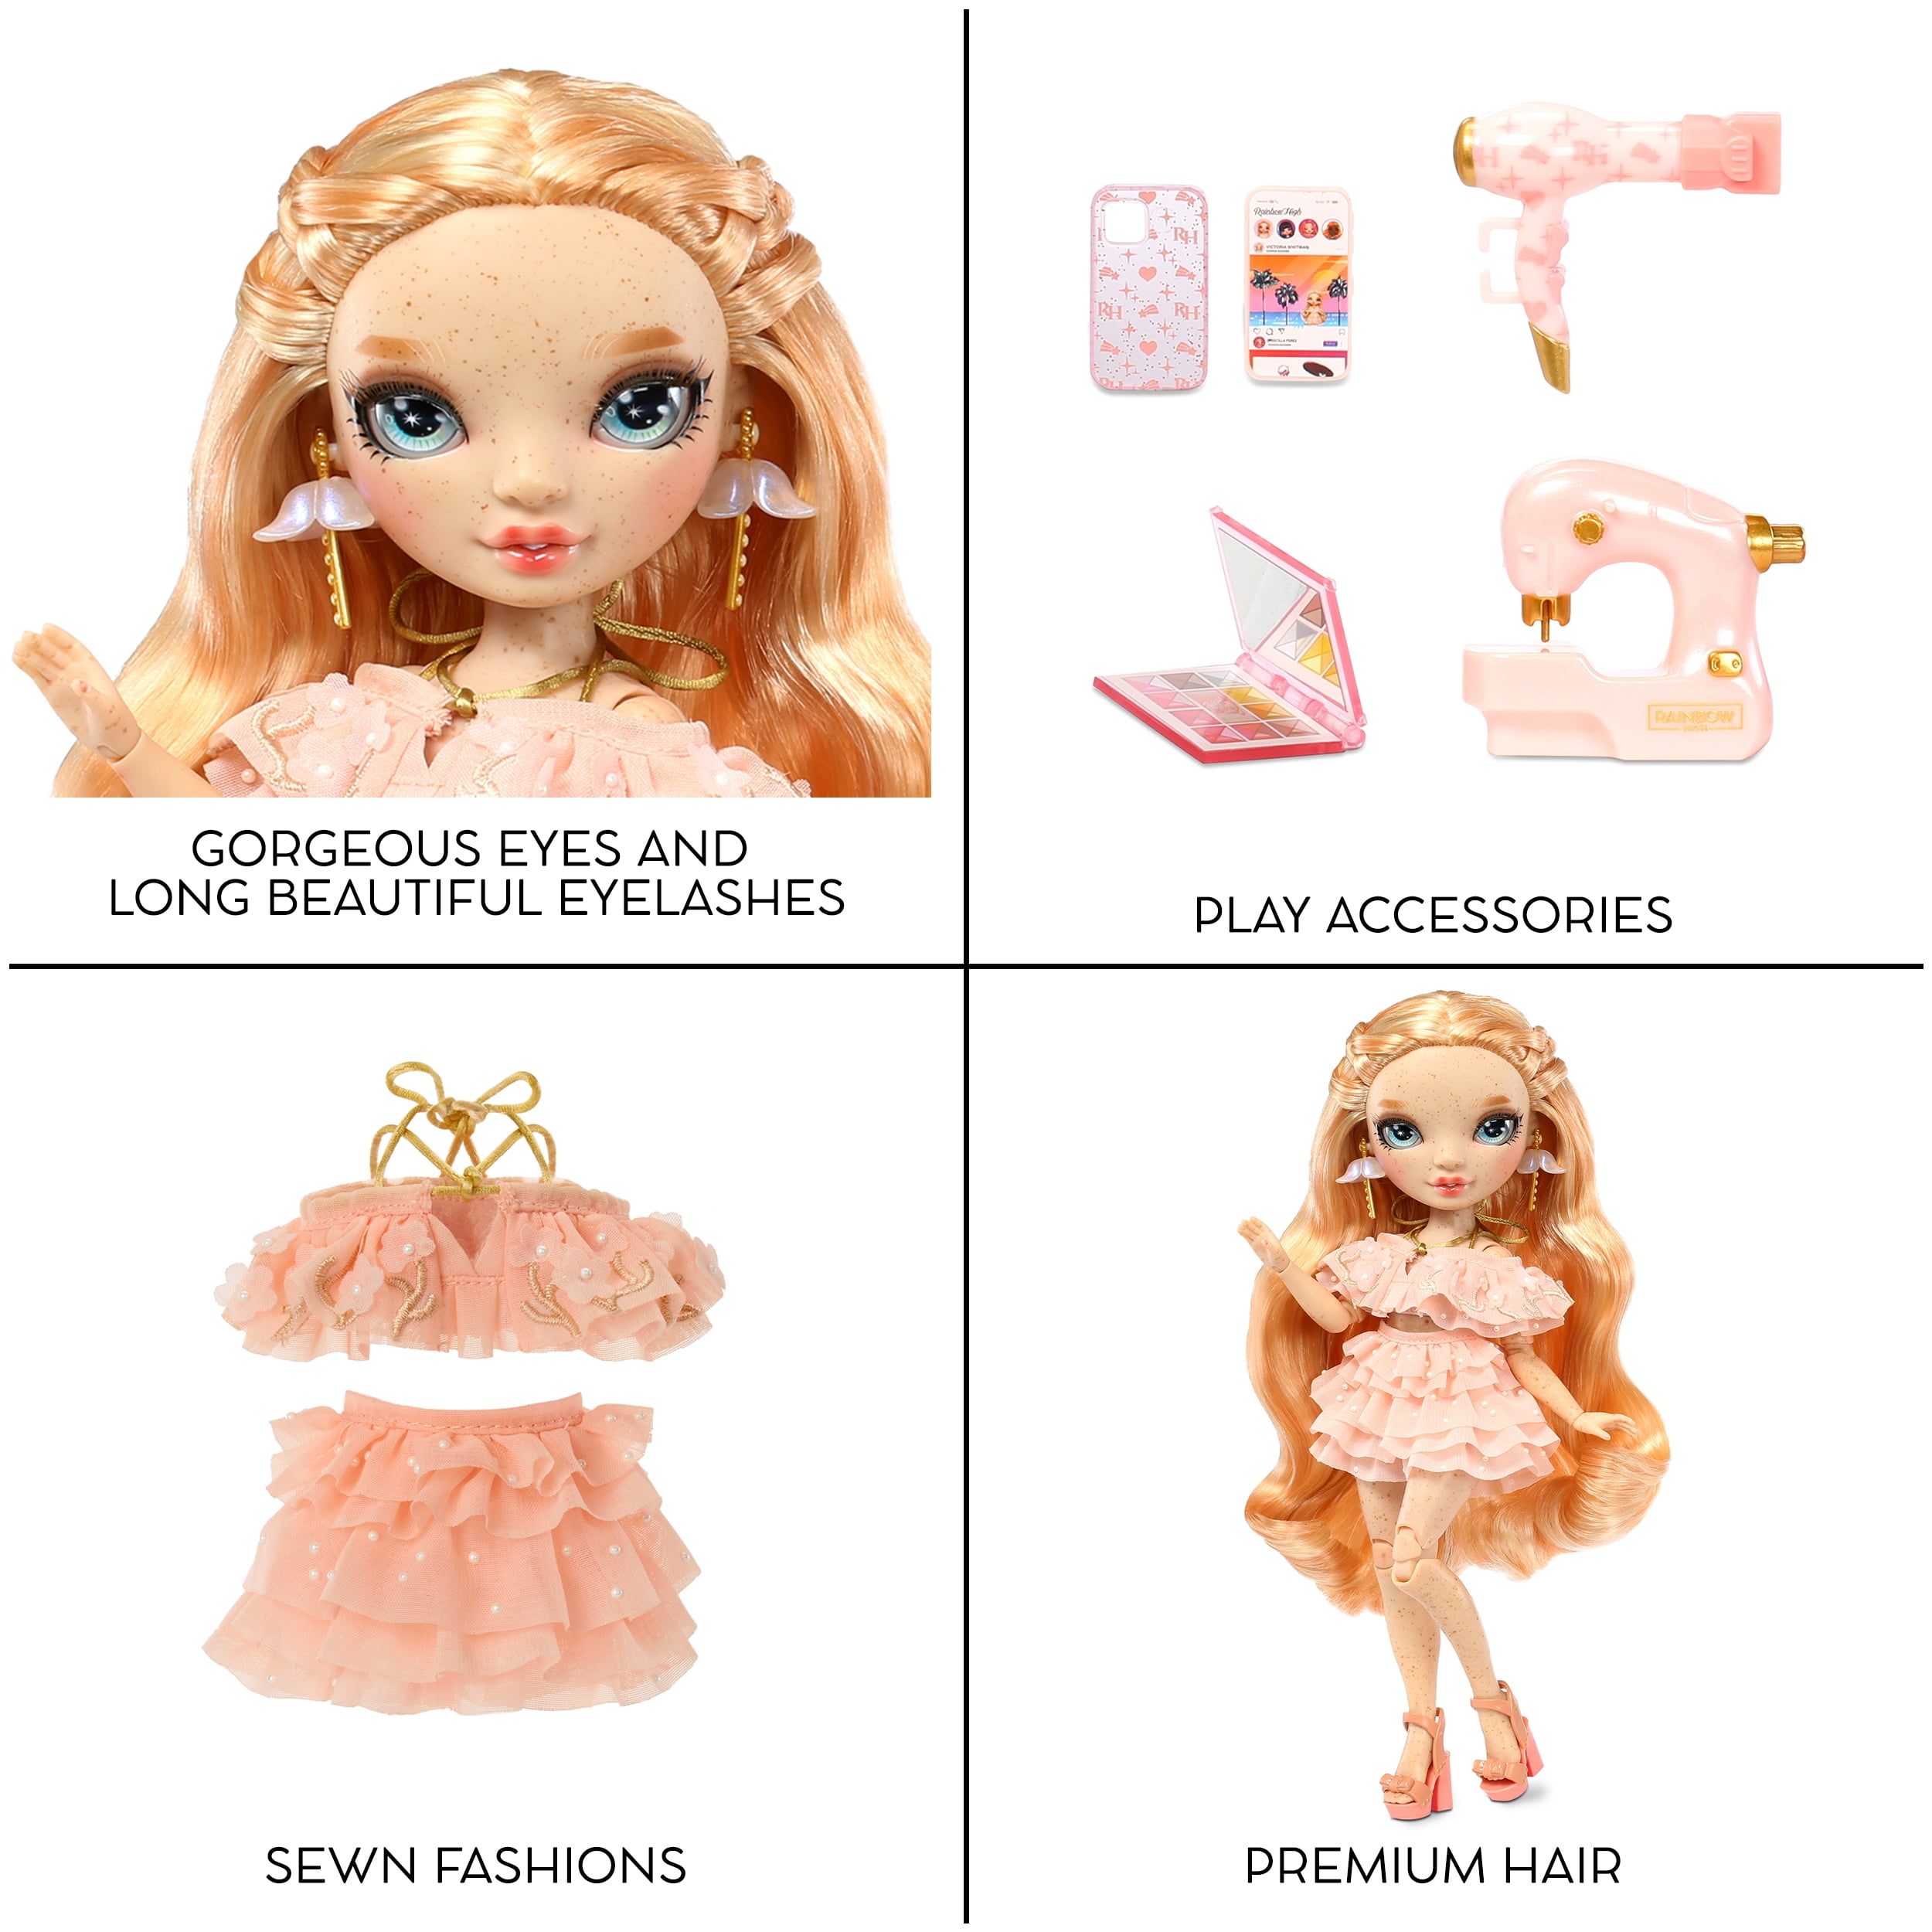 Rainbow High Light Pink Fashion Doll - Victoria Whitman